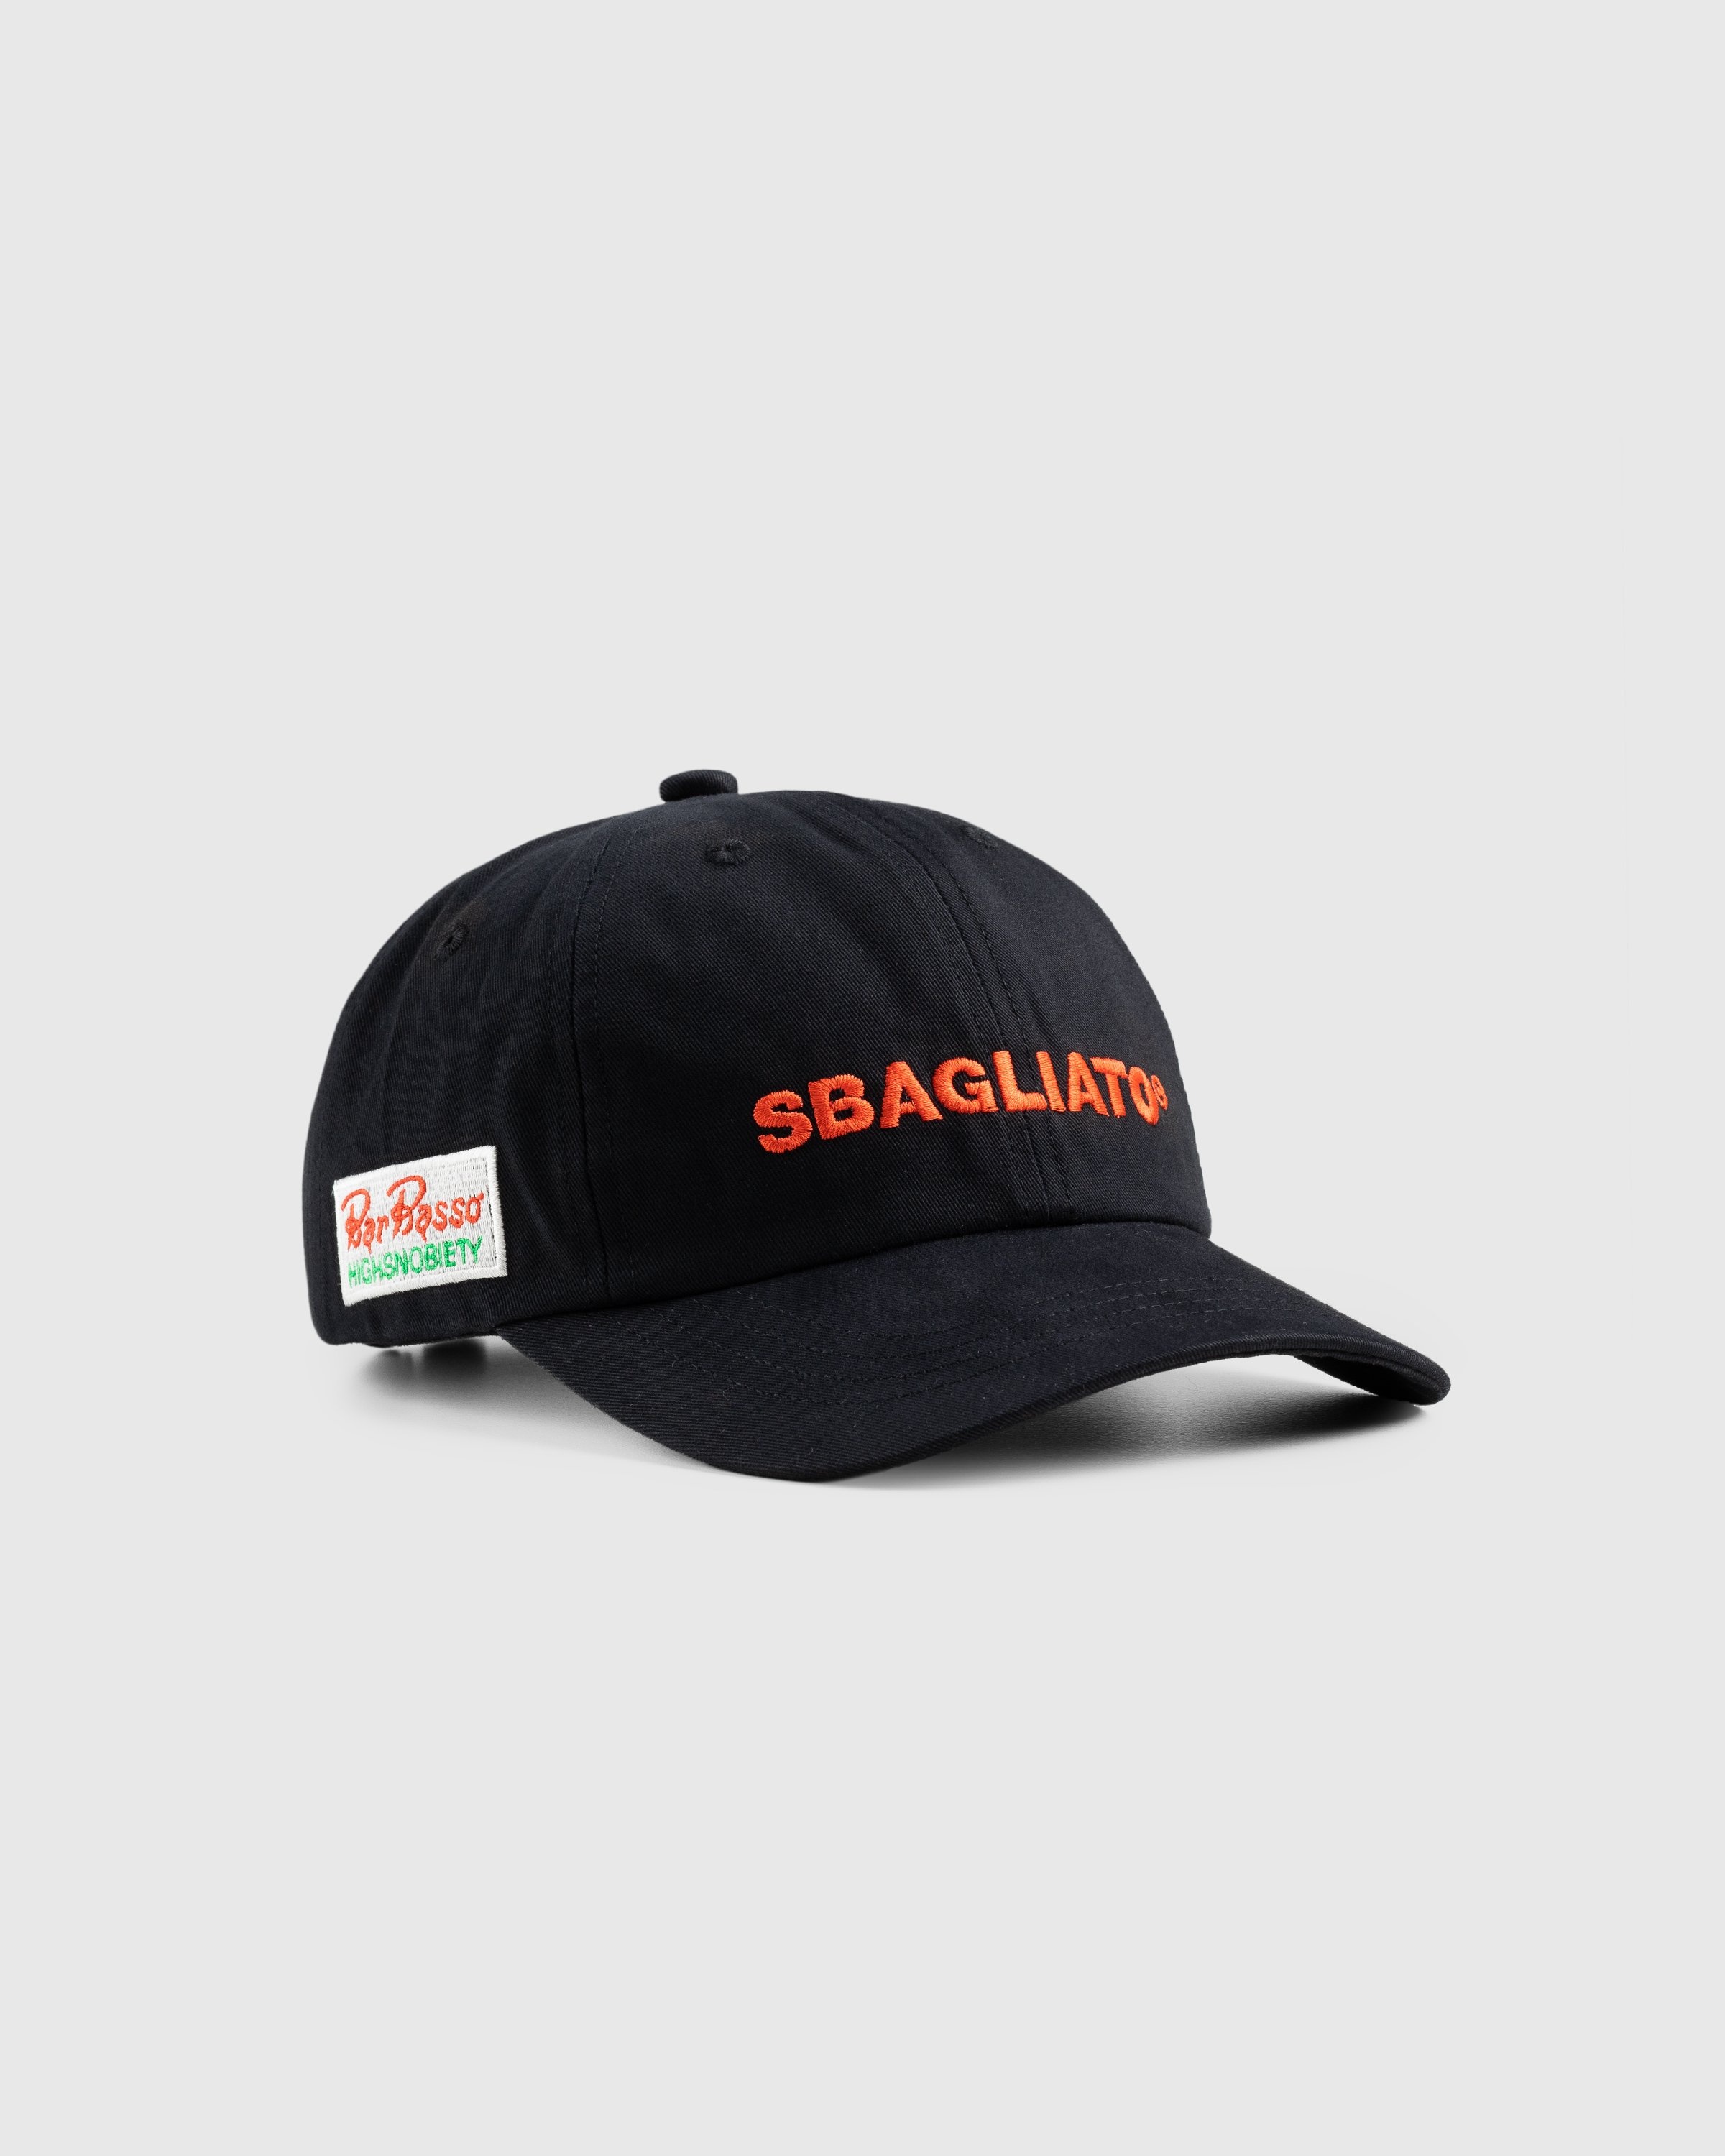 Bar Basso x Highsnobiety – Sbagliato Cap Black - Hats - Black - Image 1